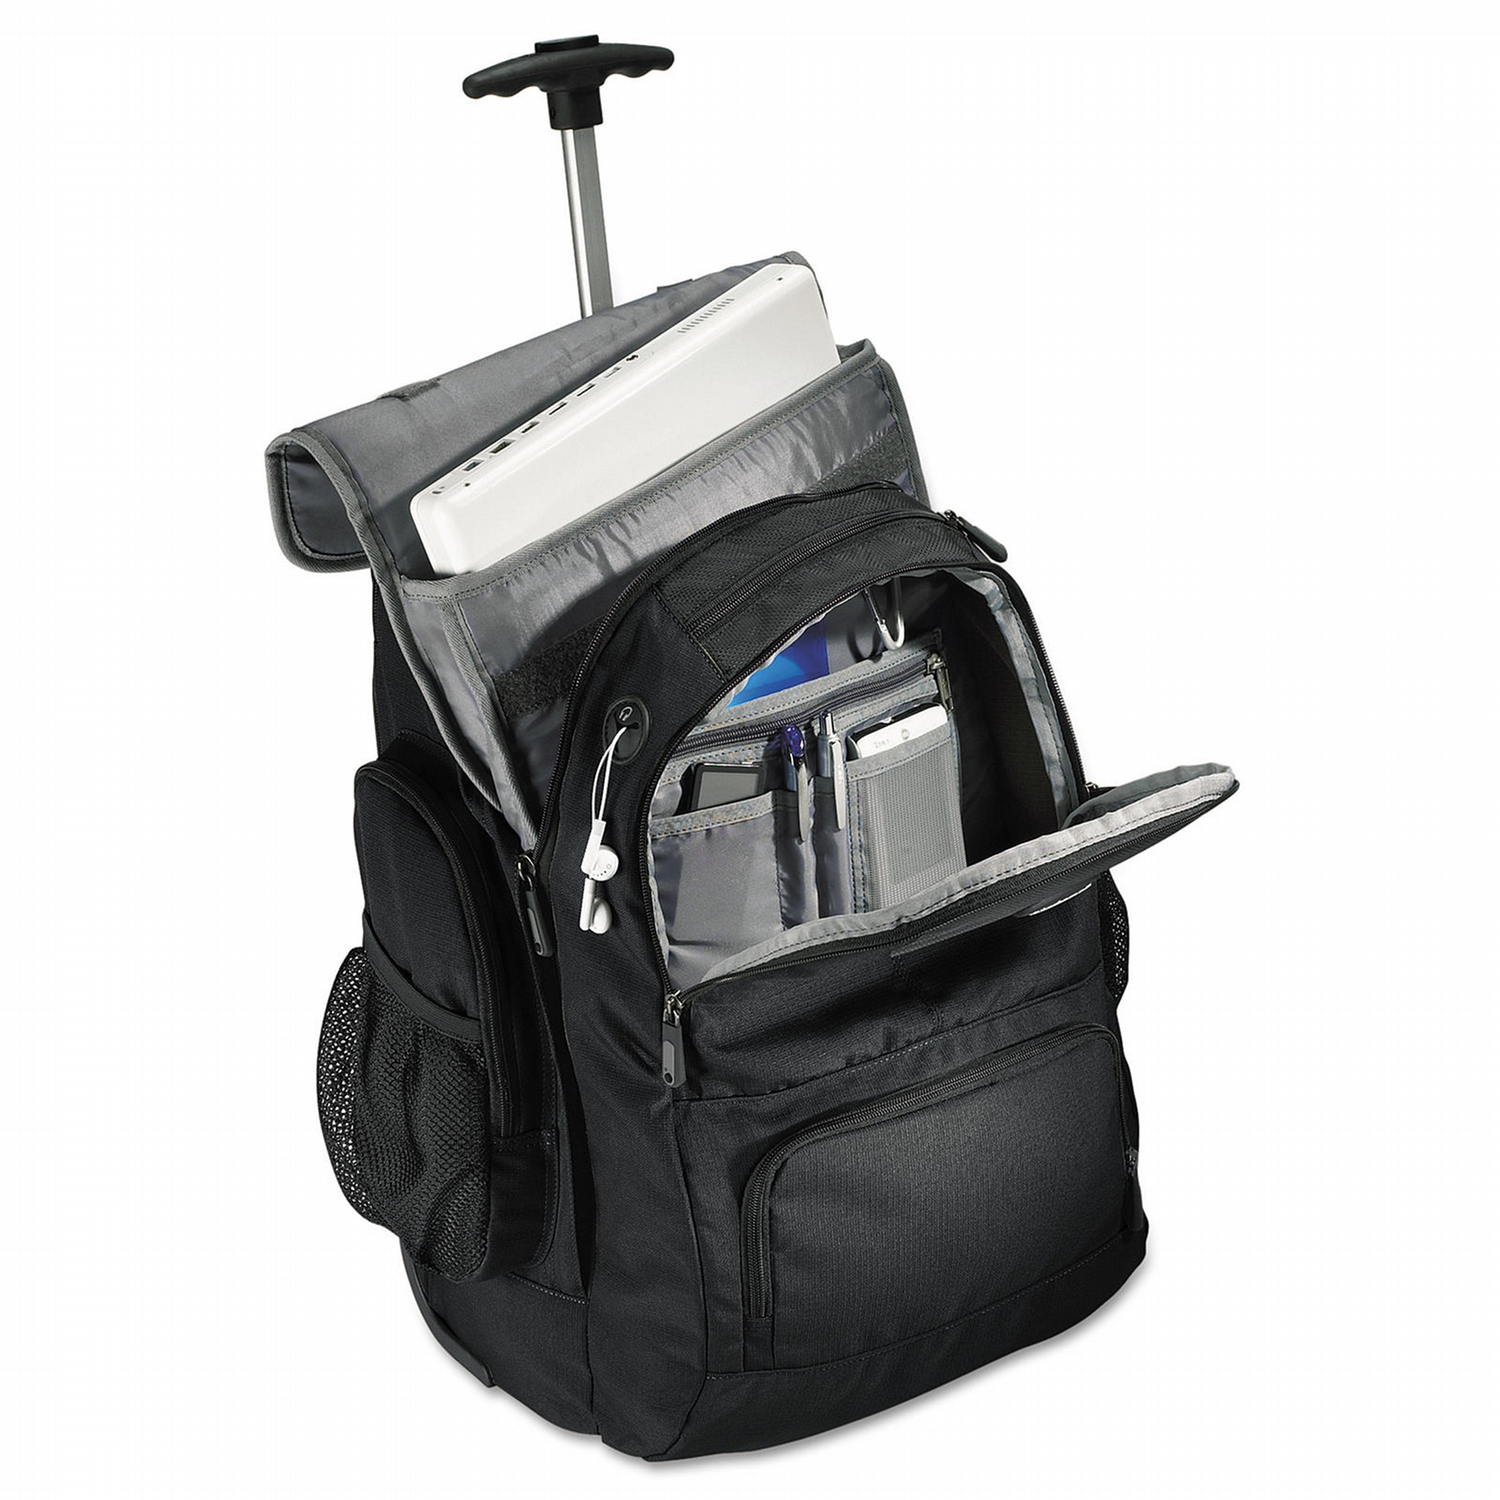 Samsonite luggage Div Rolling Backpack, 14 X 8 X 21, Black/charcoal - image 2 of 2